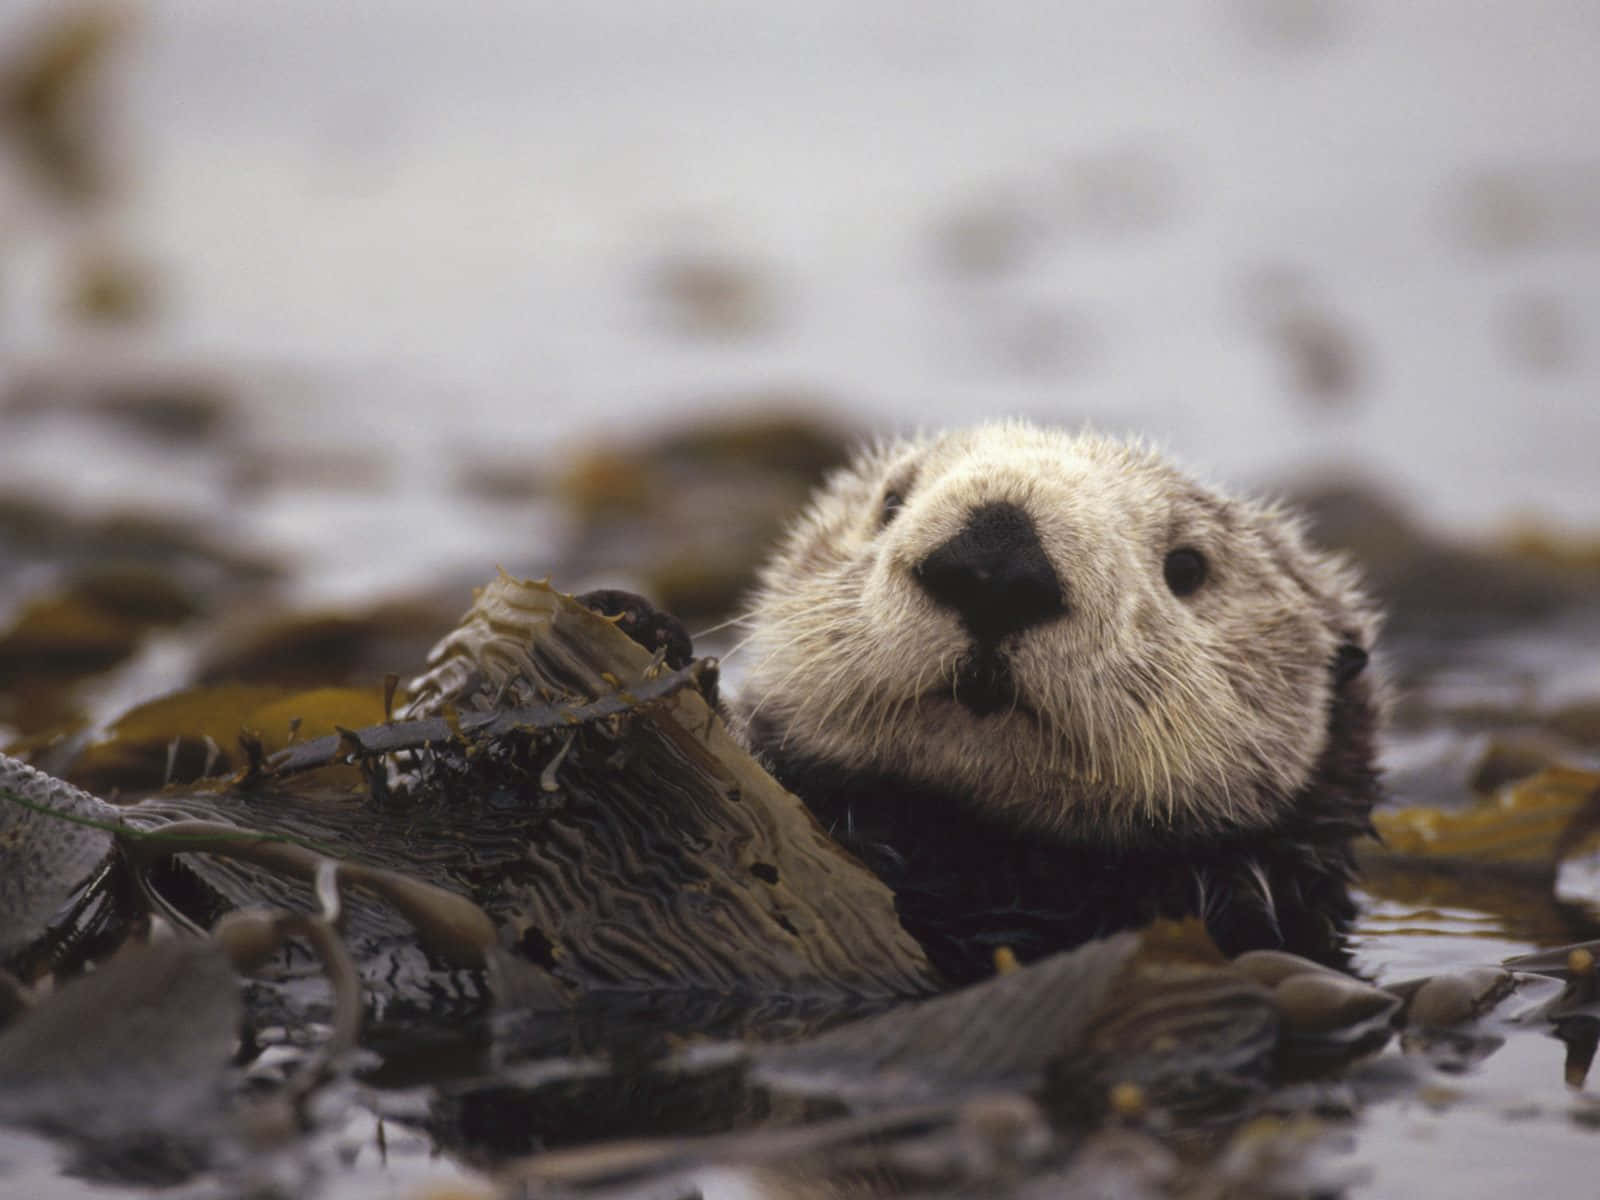 A Curious Otter Enjoys a Refreshing Dip